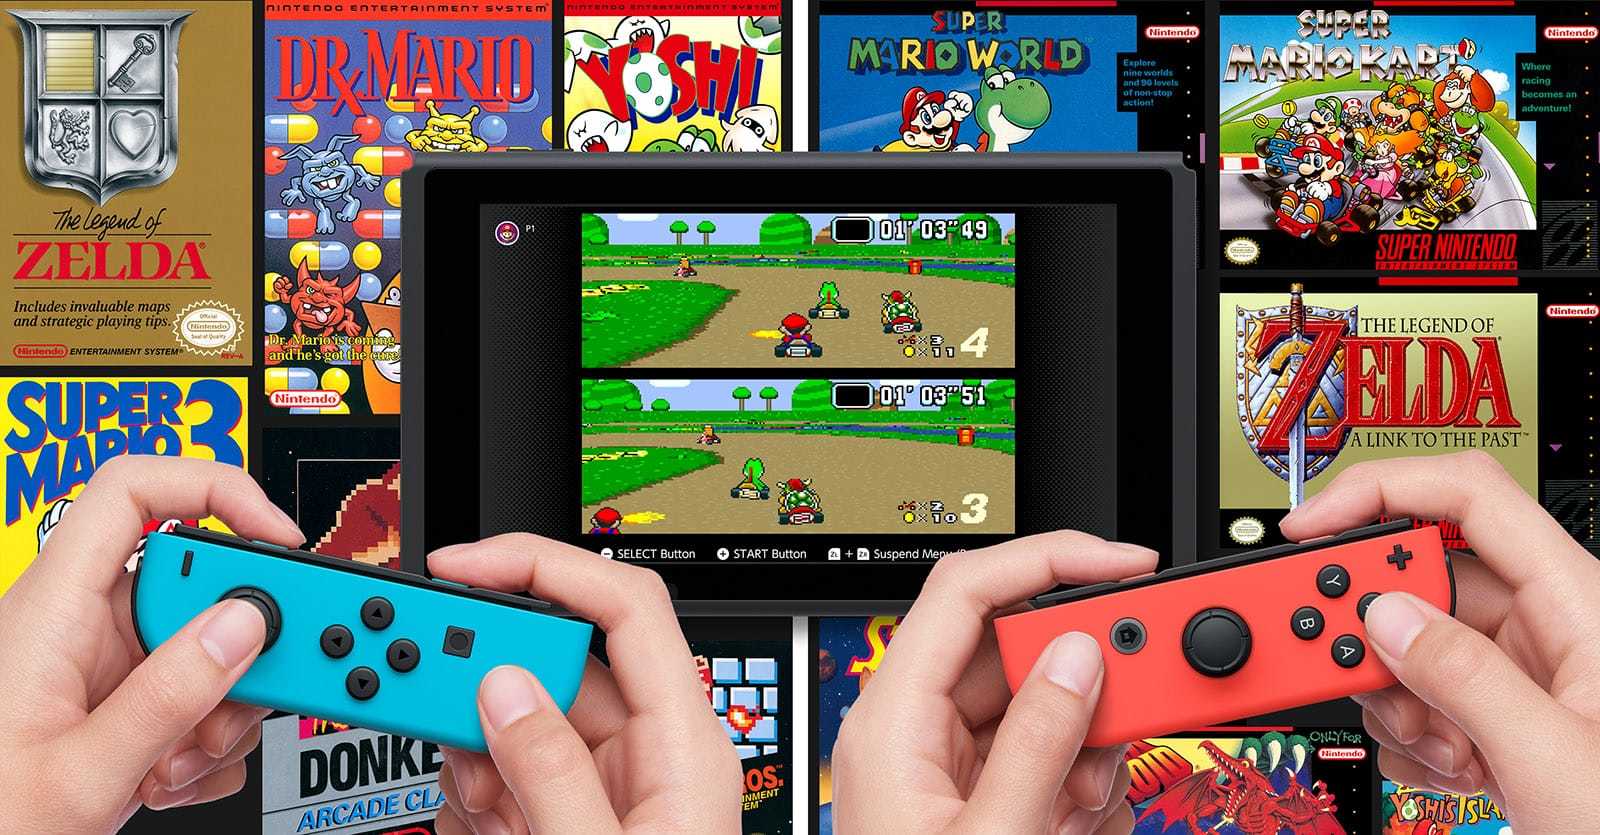 Super Nintendo Entertainment System™ - Nintendo Switch Online - Nintendo  Site Oficial